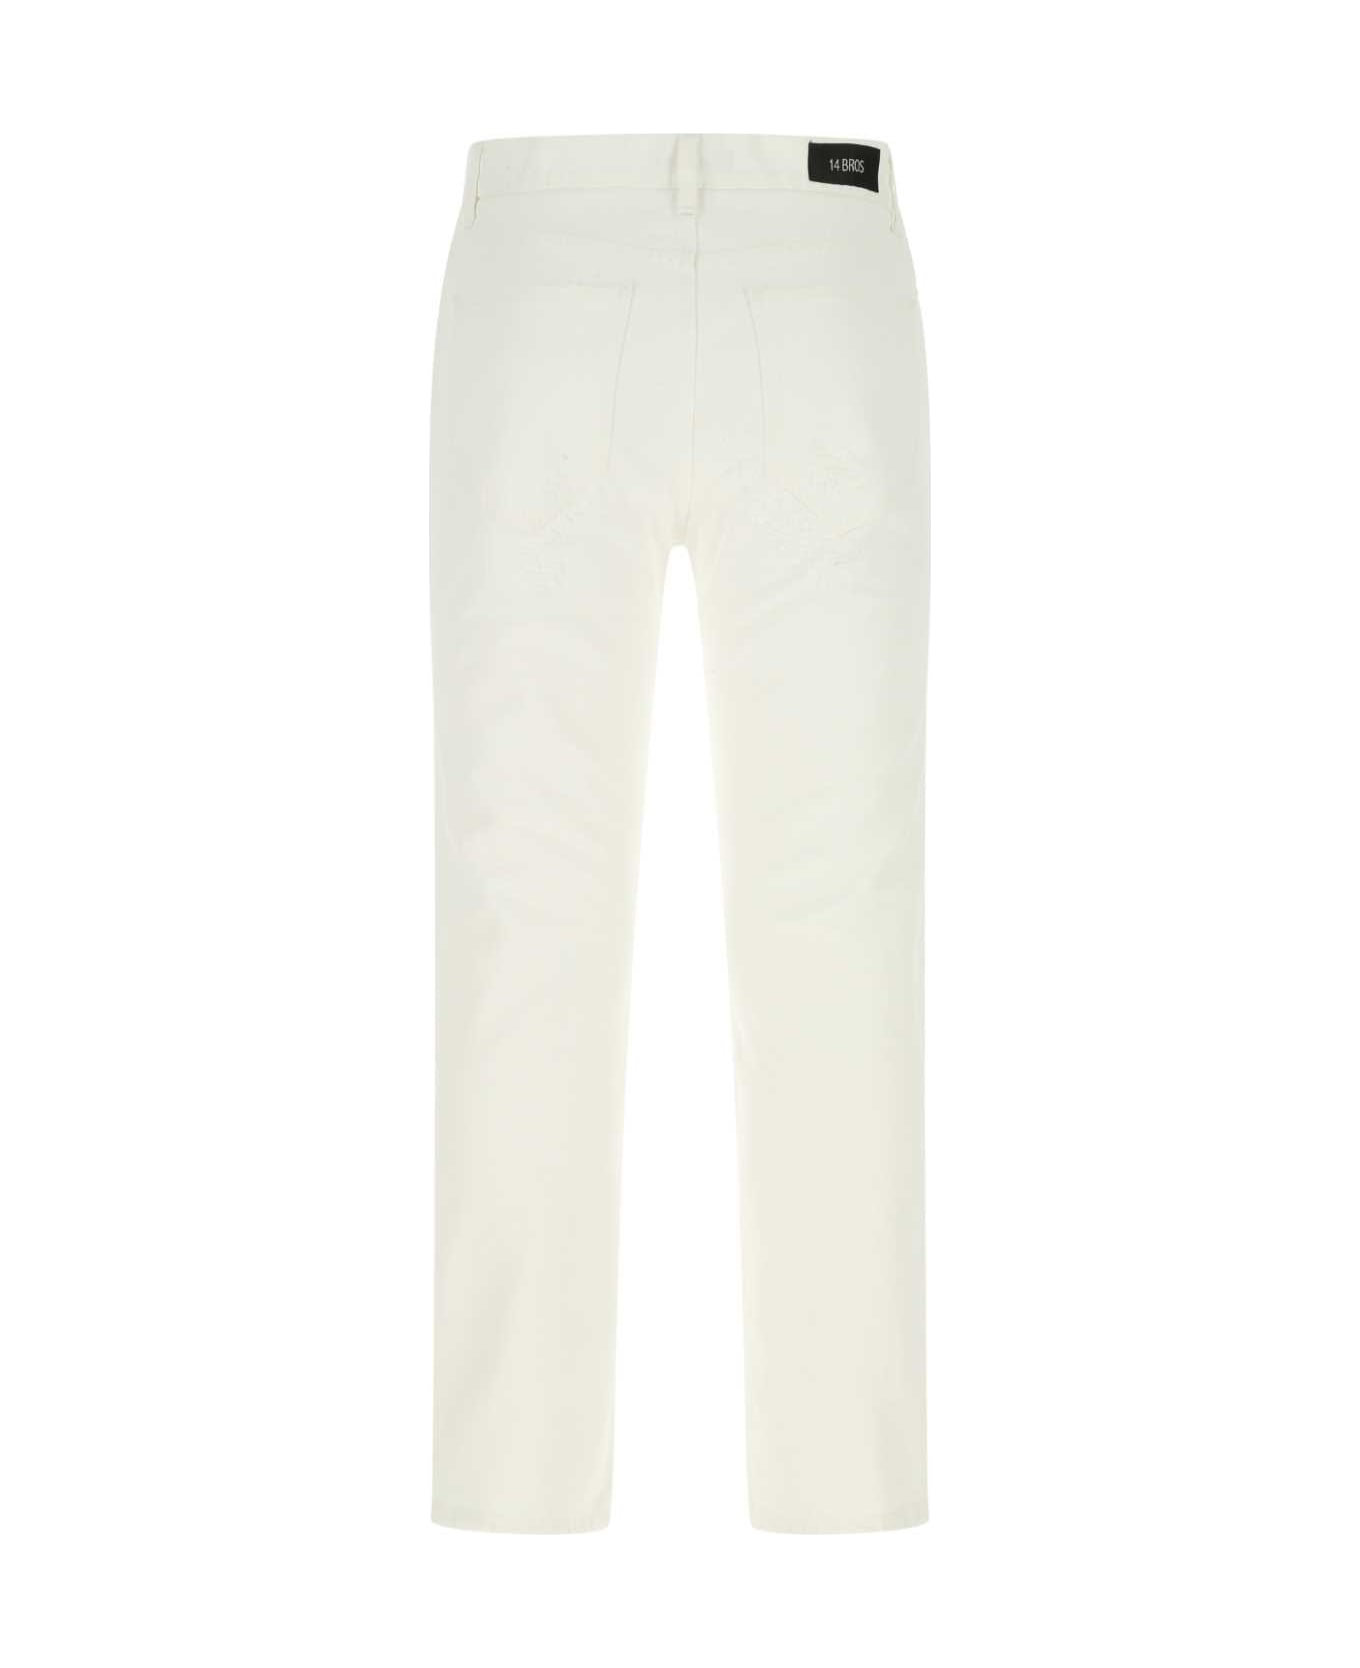 14 Bros White Denim Cheswick Jeans - 001 ボトムス